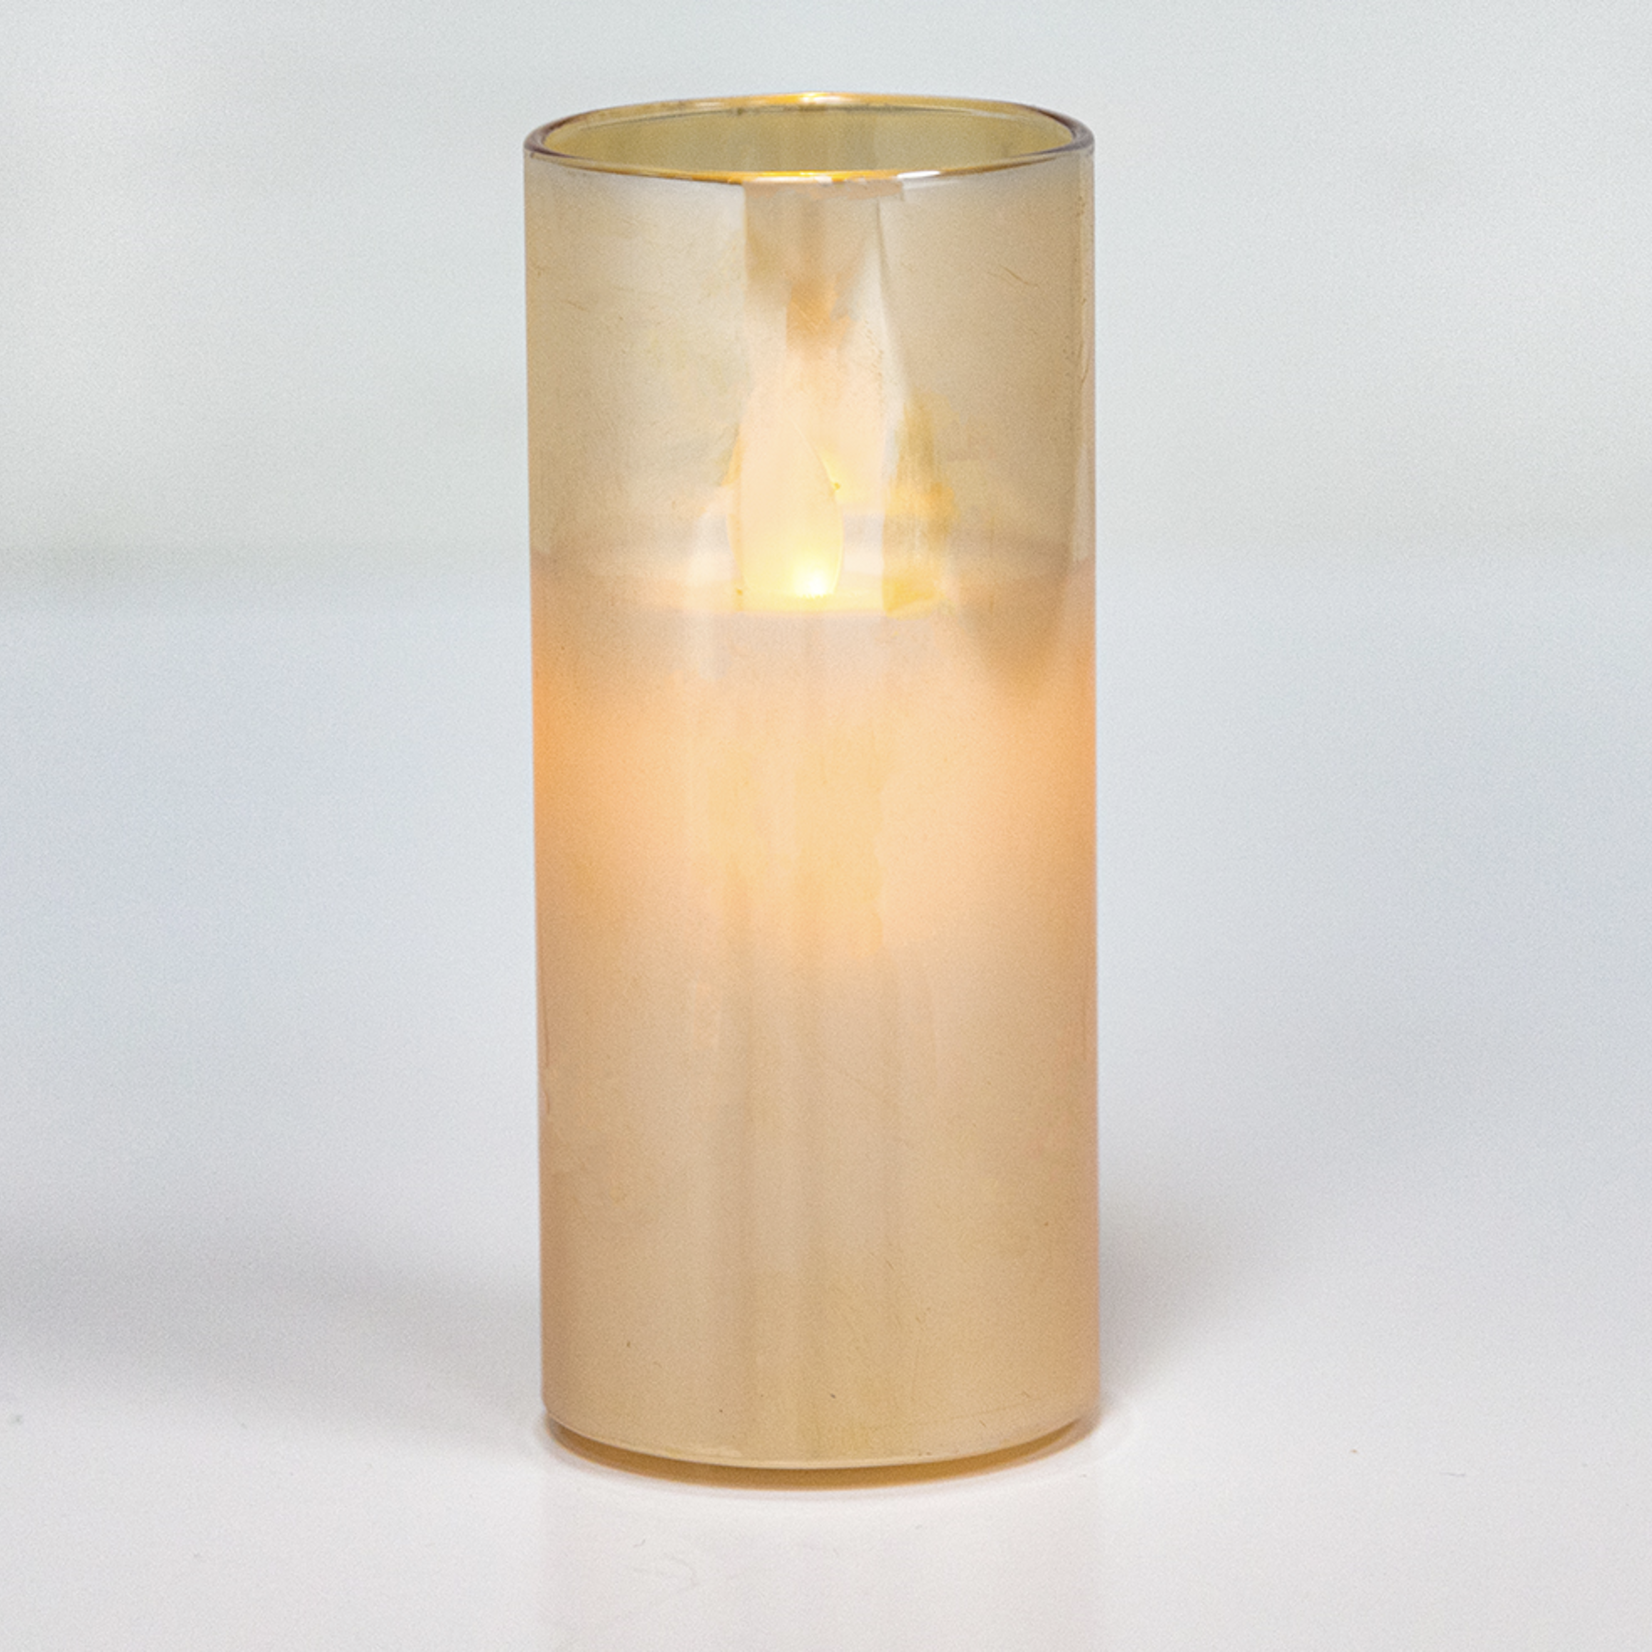 5”H X 2” AMBER LED GLASS CANDLE